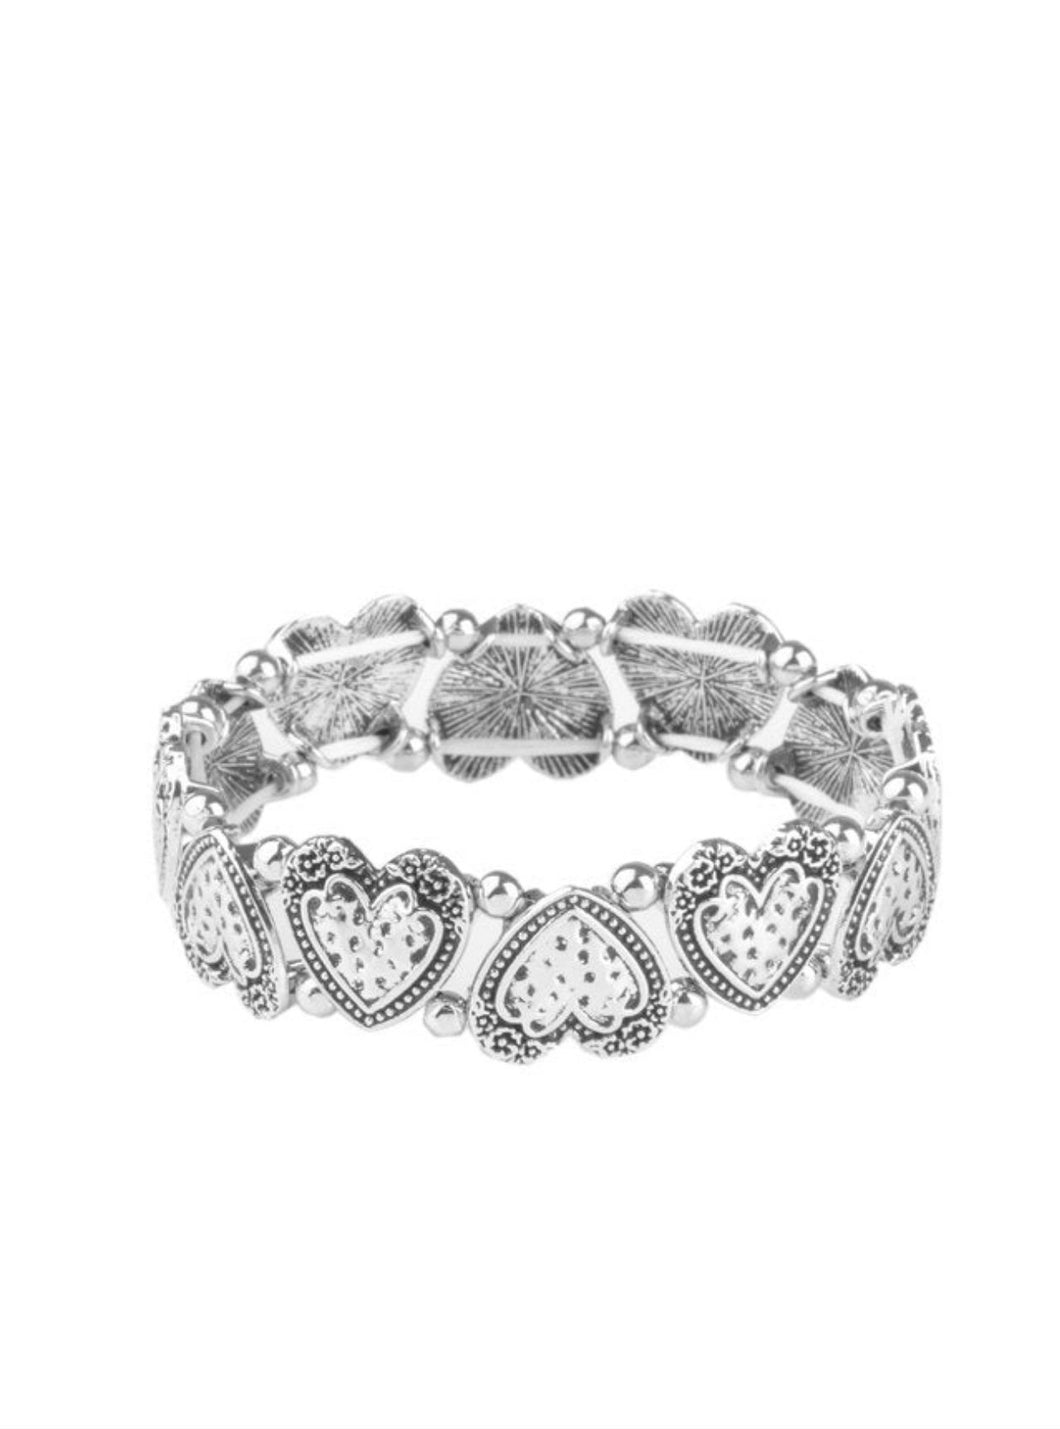 Rustic Heartthrob Silver Bracelet